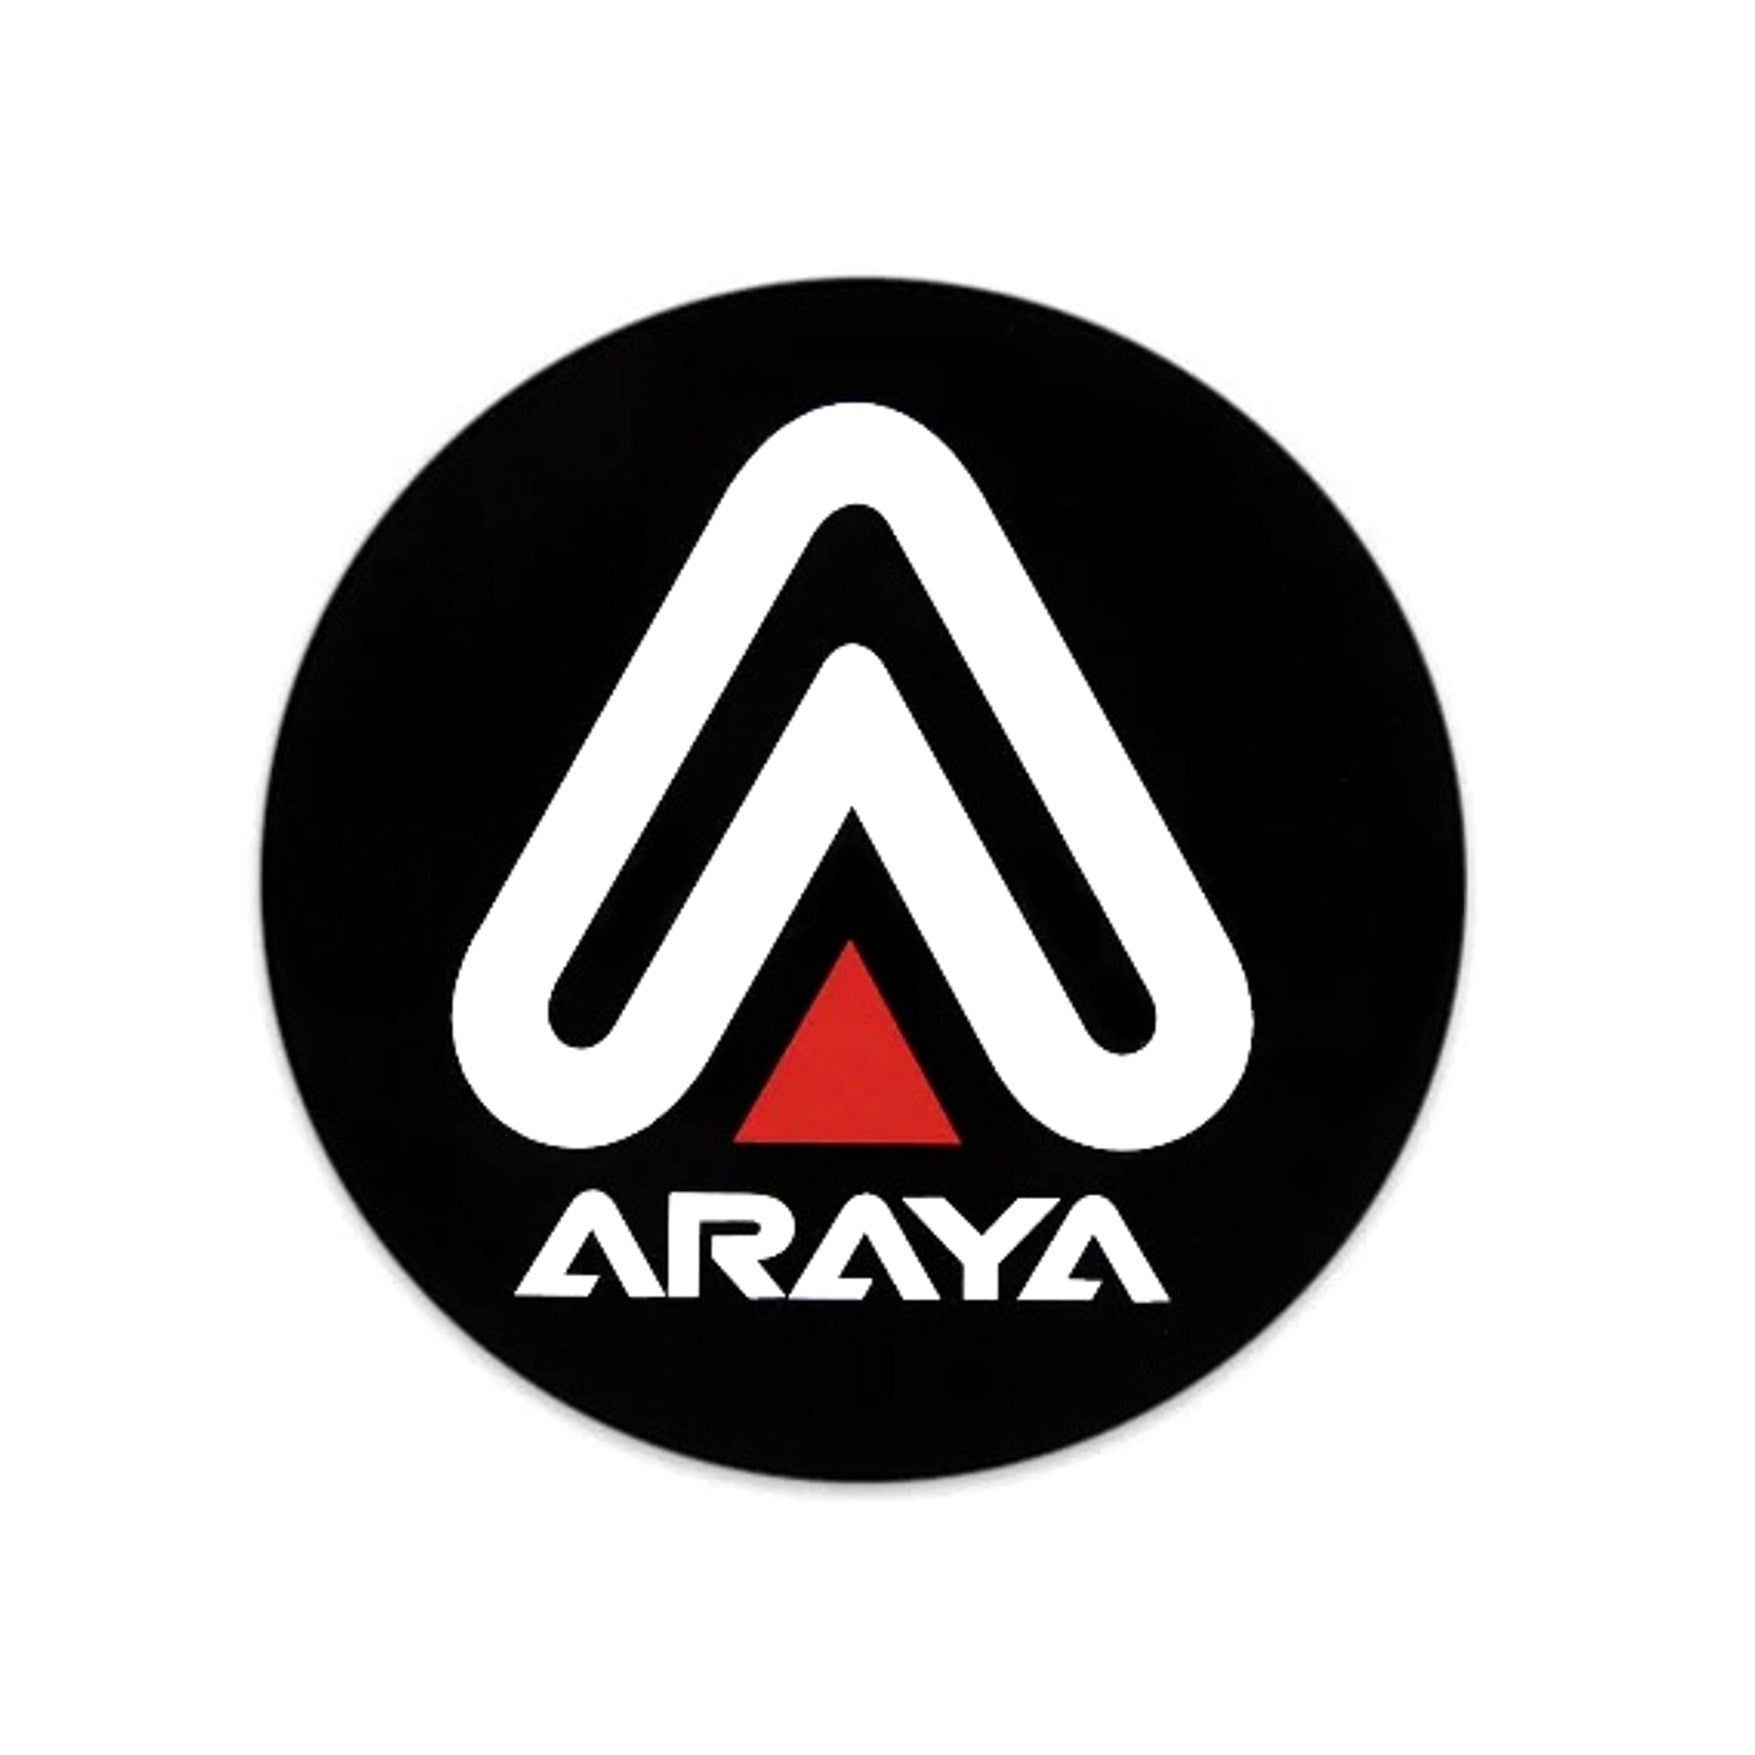 Araya sticker - Retrogression Fixed Gear